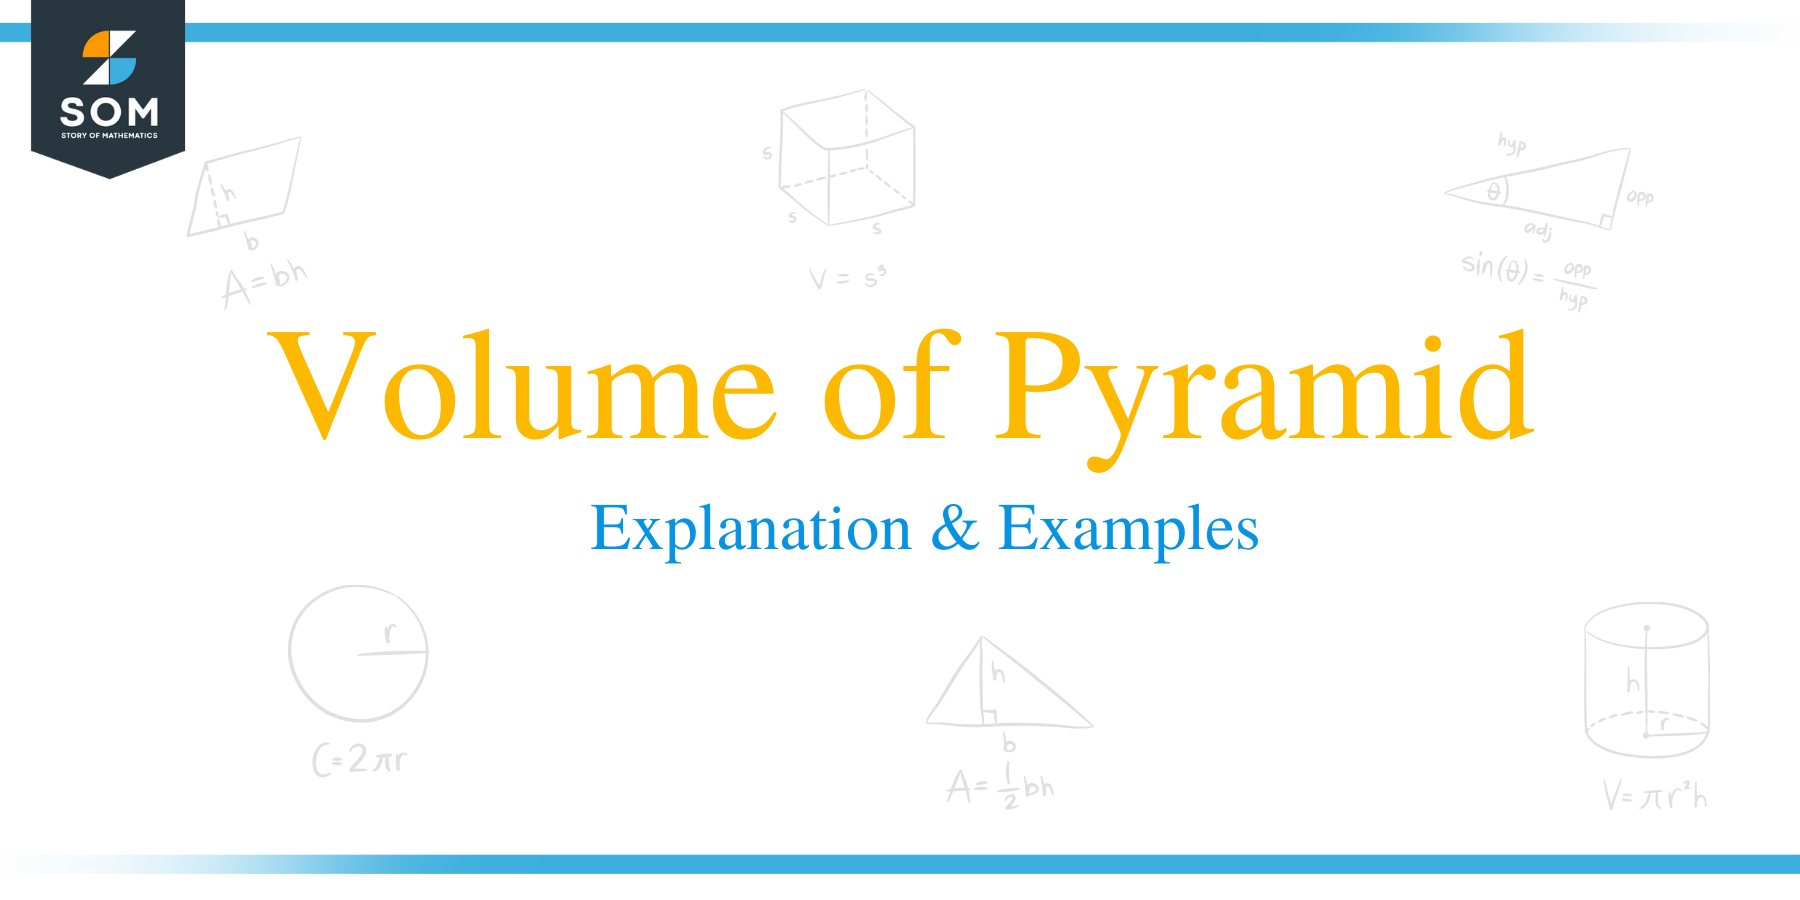 Volume of Pyramid